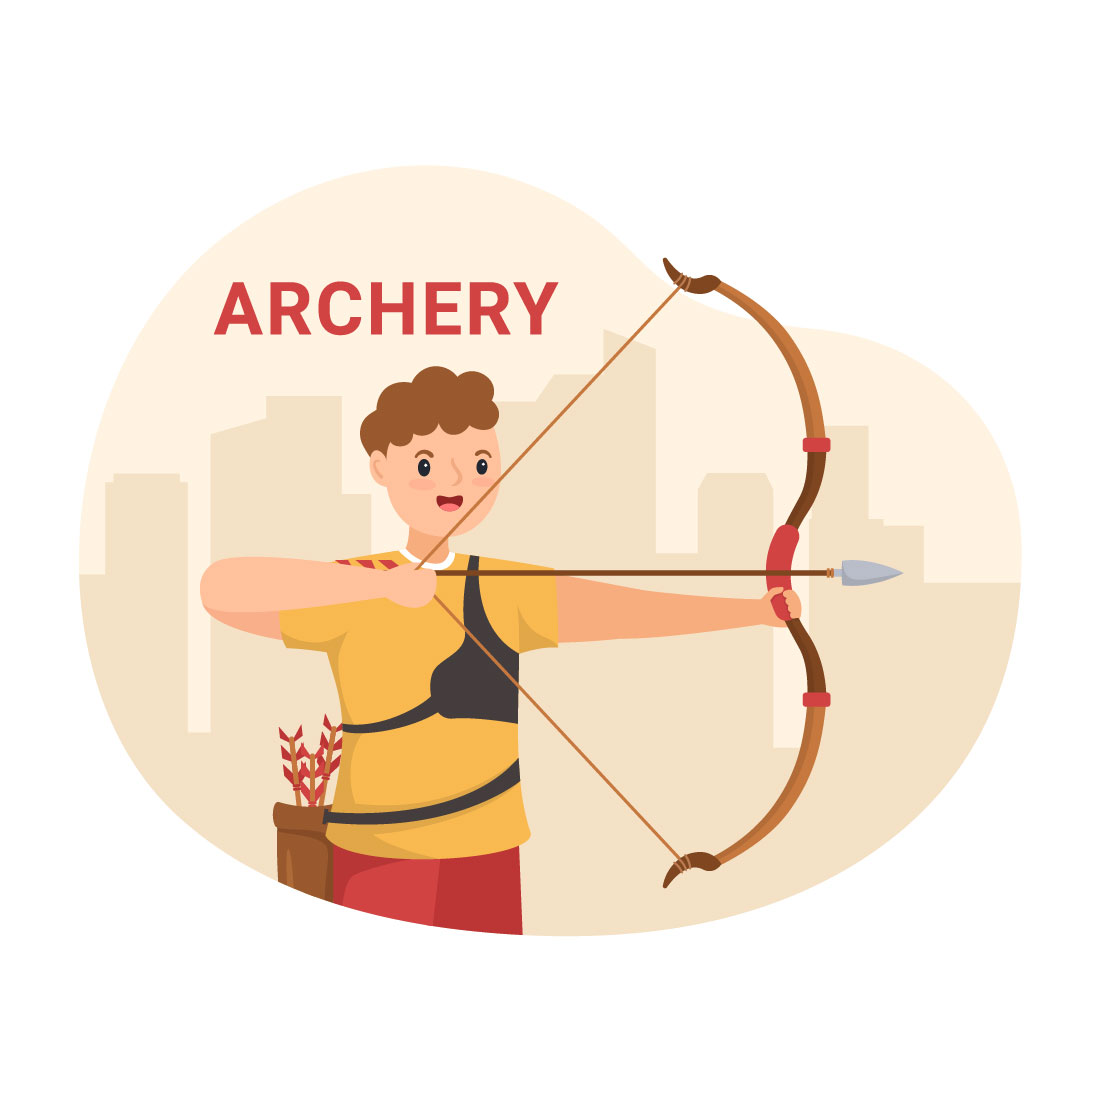 13 Archery Sport Illustration cover image.